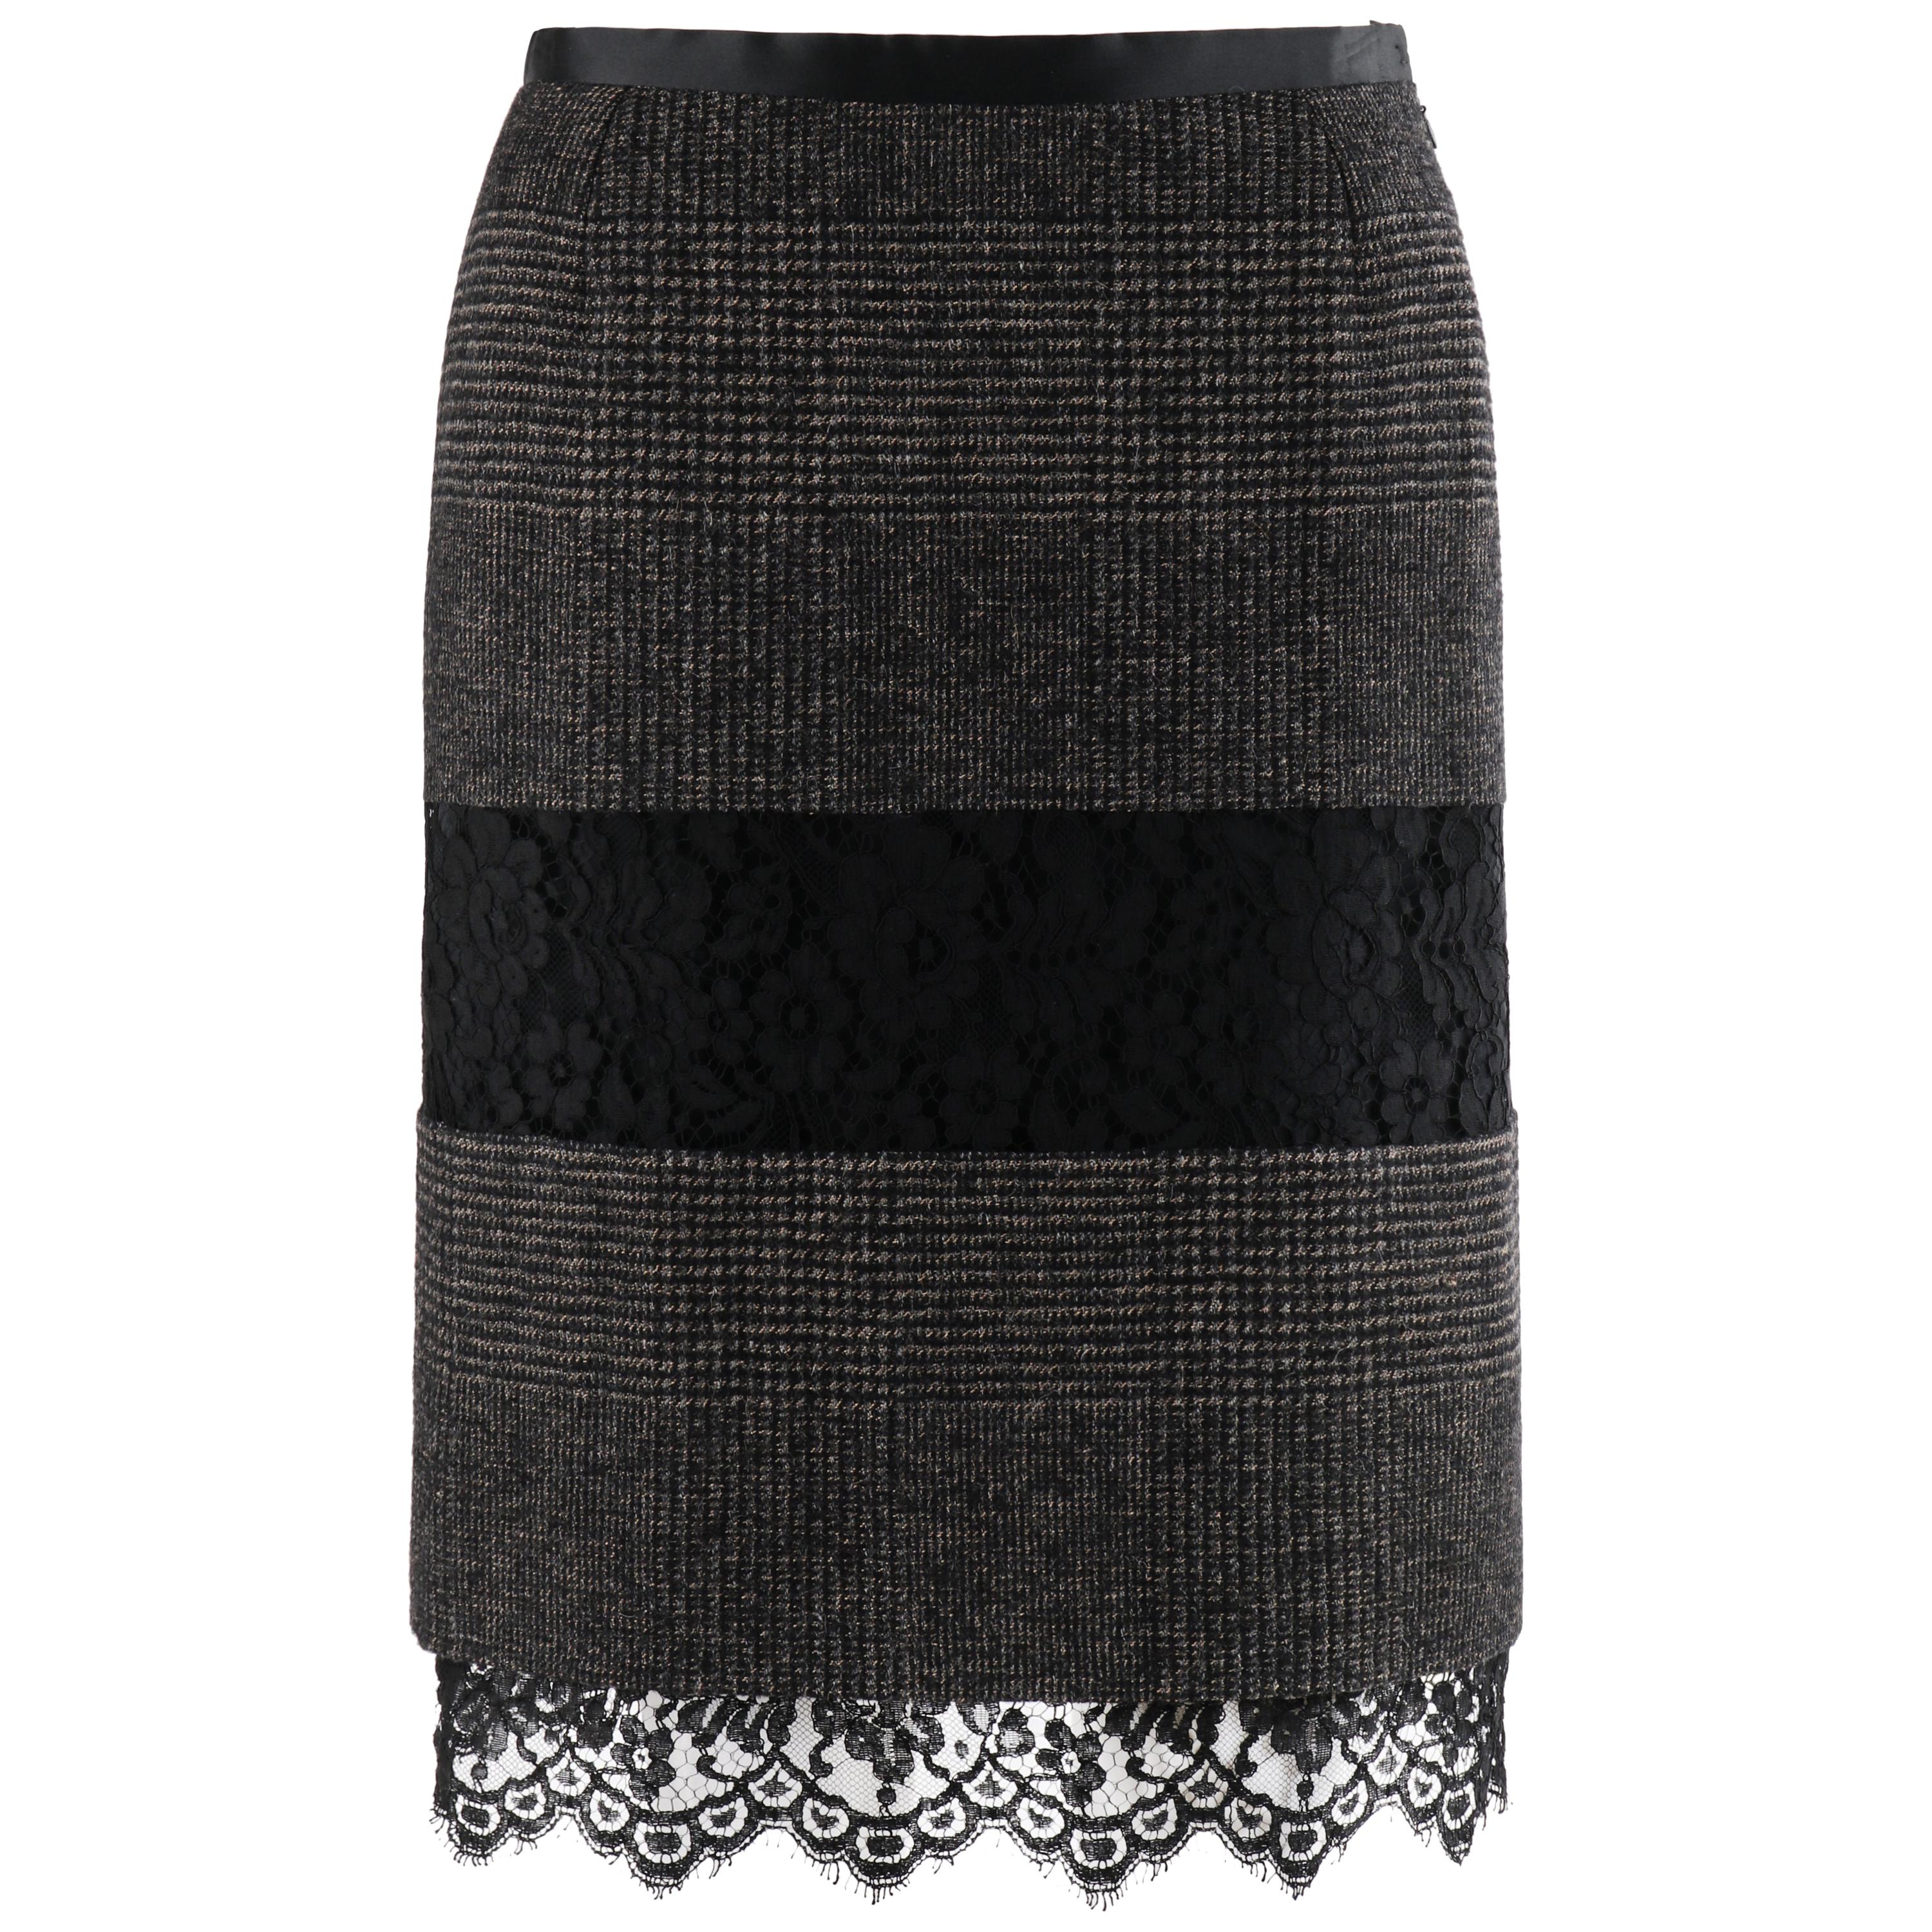 DOLCE & GABBANA A/W 2010 Black Gray Plaid Tweed Lace Trim Panel Sheath Skirt